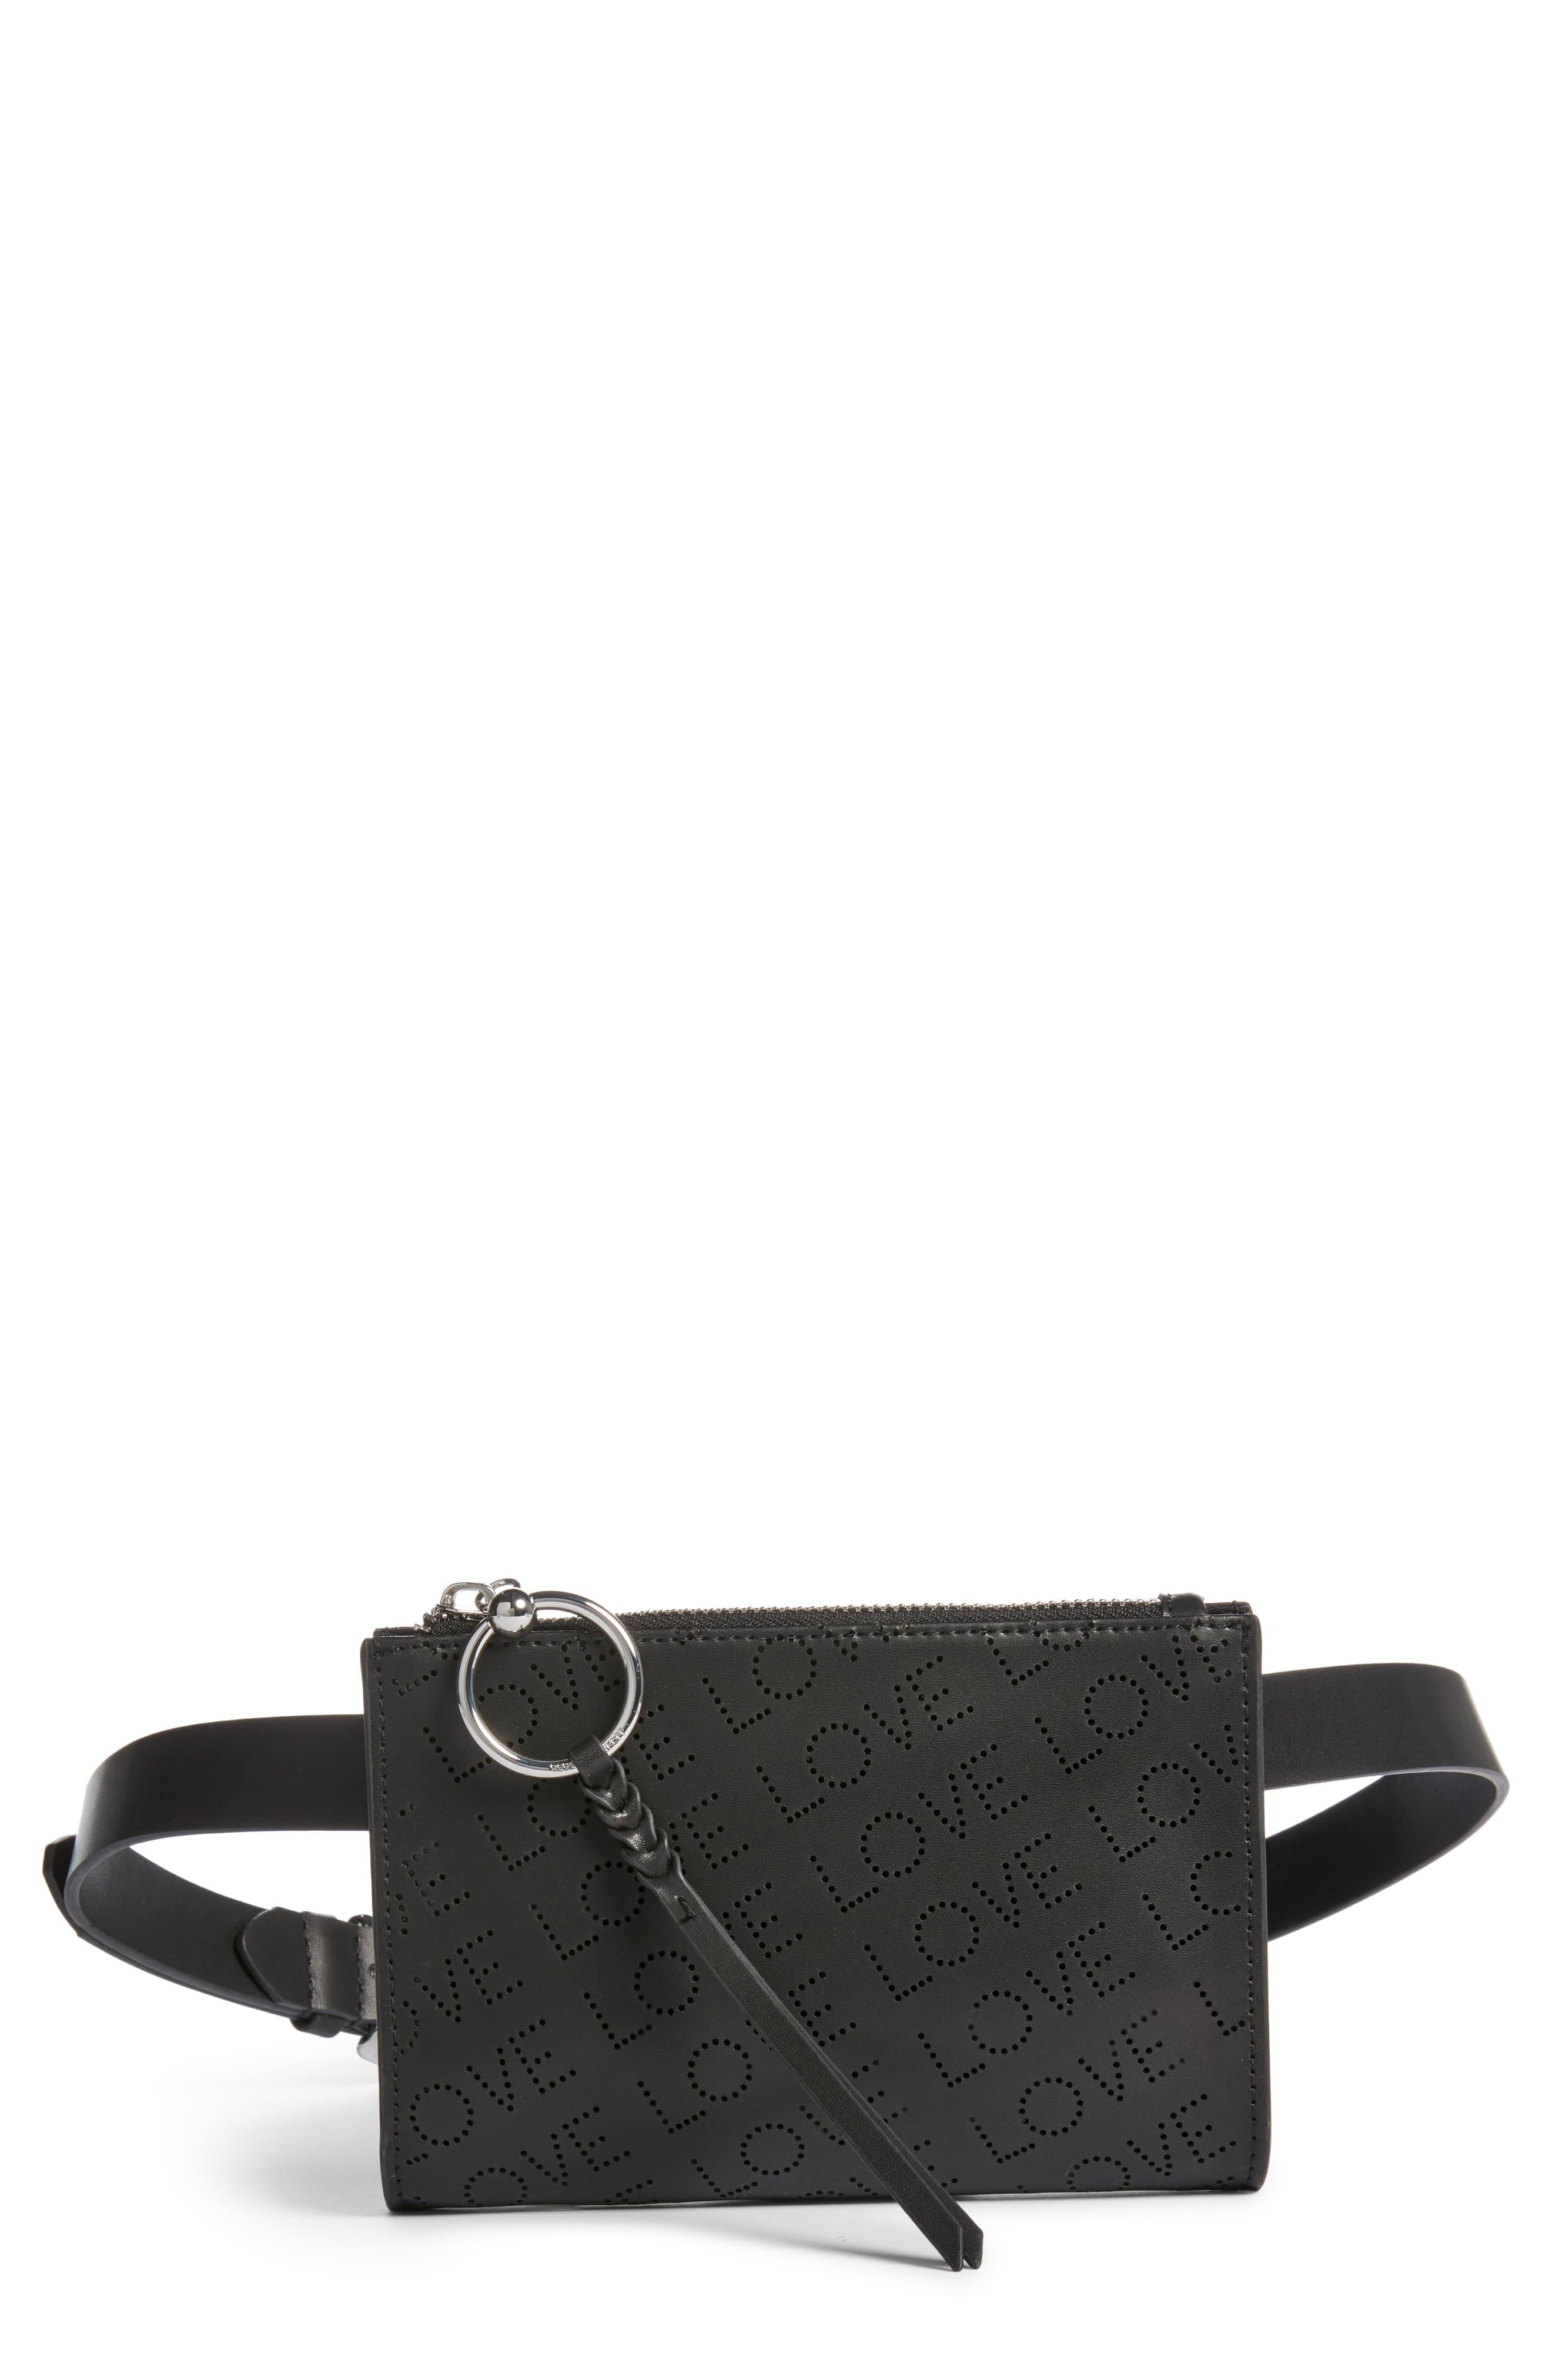 Rebecca Minkoff Love Perforated Leather Belt Bag in Black - Lyst